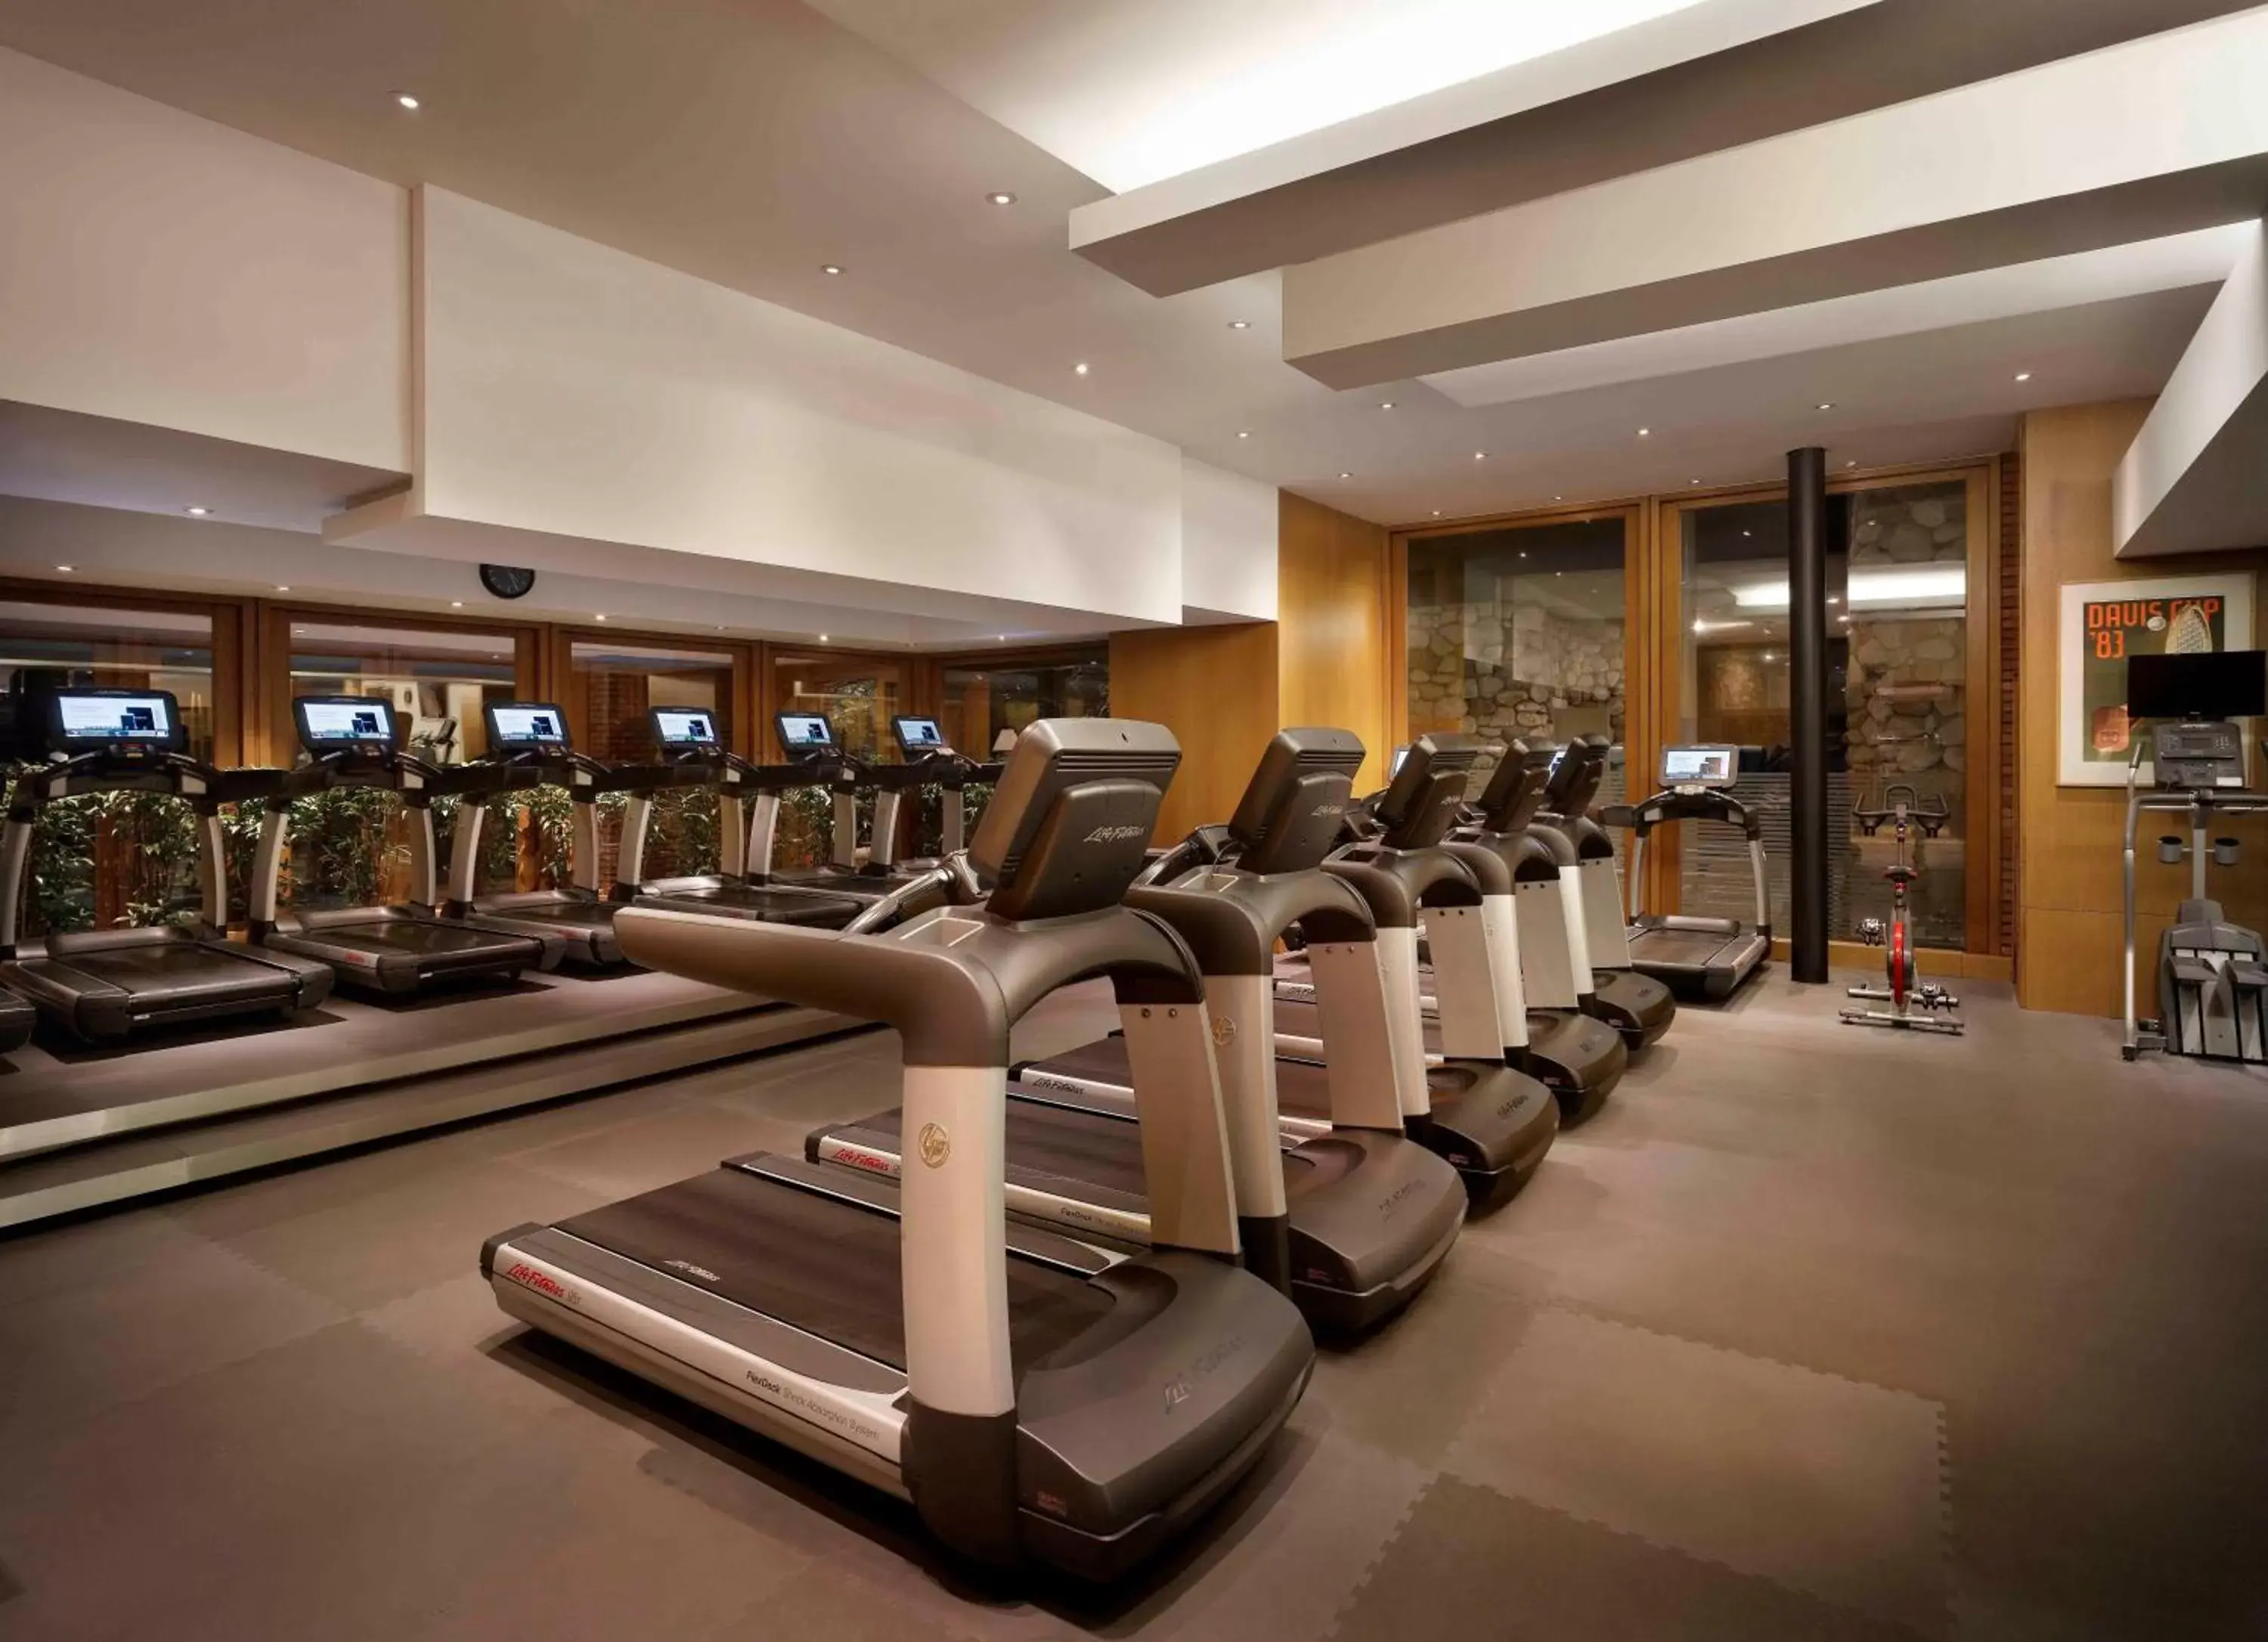 Fitness centre/facilities, Fitness Center/Facilities in Grand Hyatt Seoul